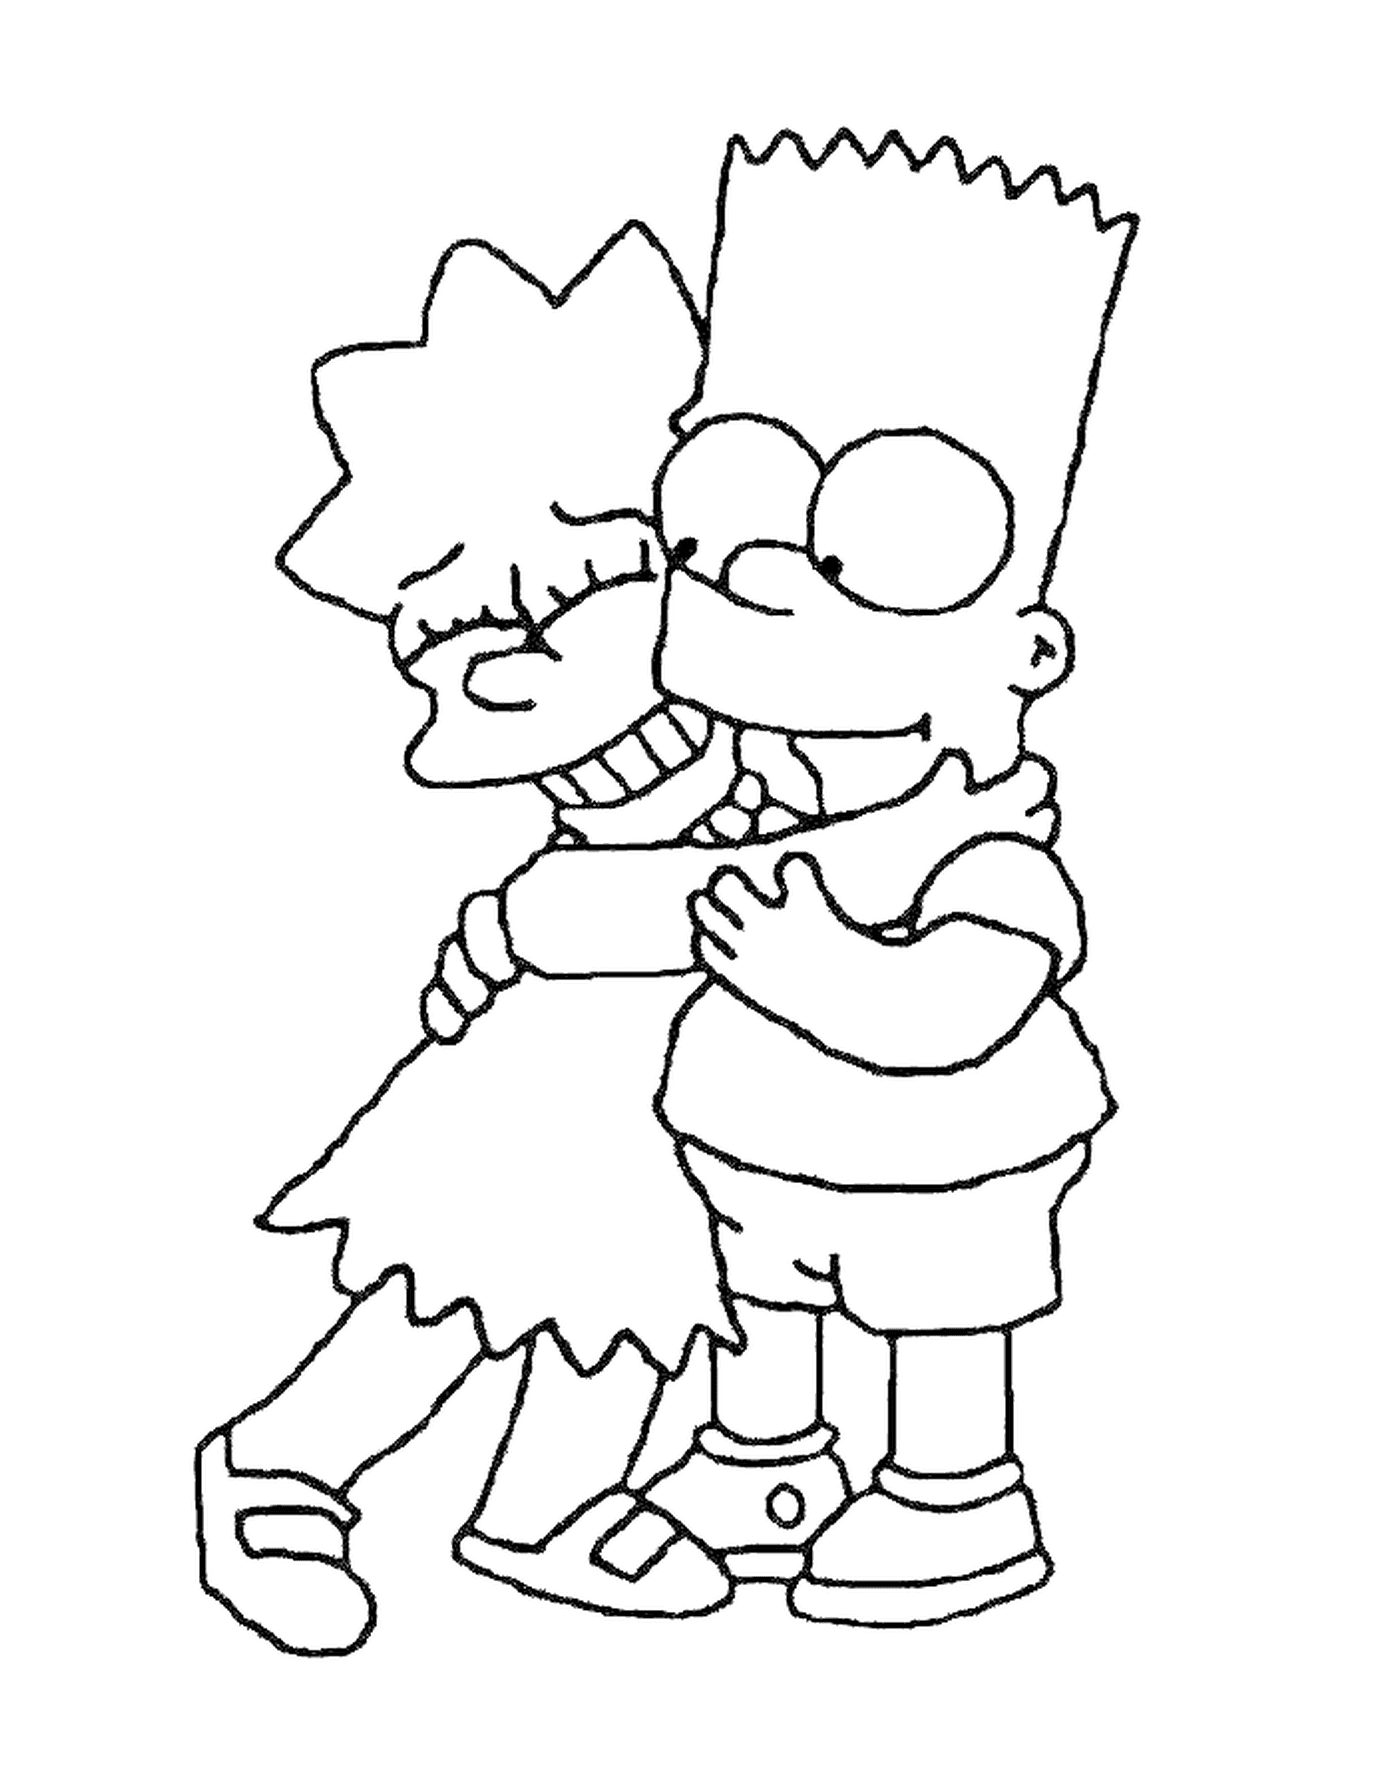  Bart和Lisa拥抱,男孩抱着一个女孩在她的怀里 